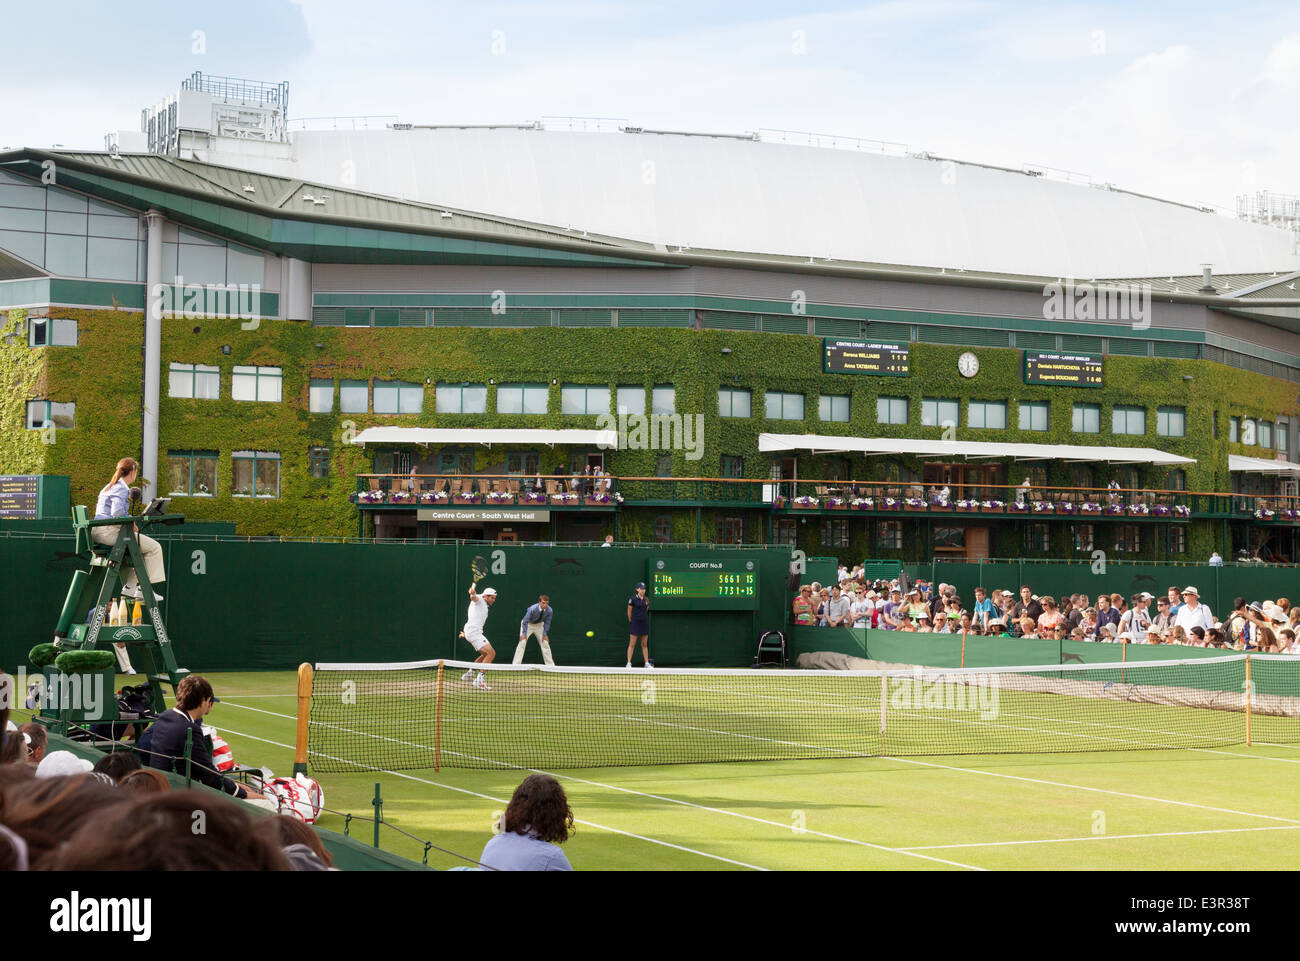 Tennis match on an outside court, the Wimbledon All England Lawn Tennis Club Championships, Wimbledon London UK Stock Photo